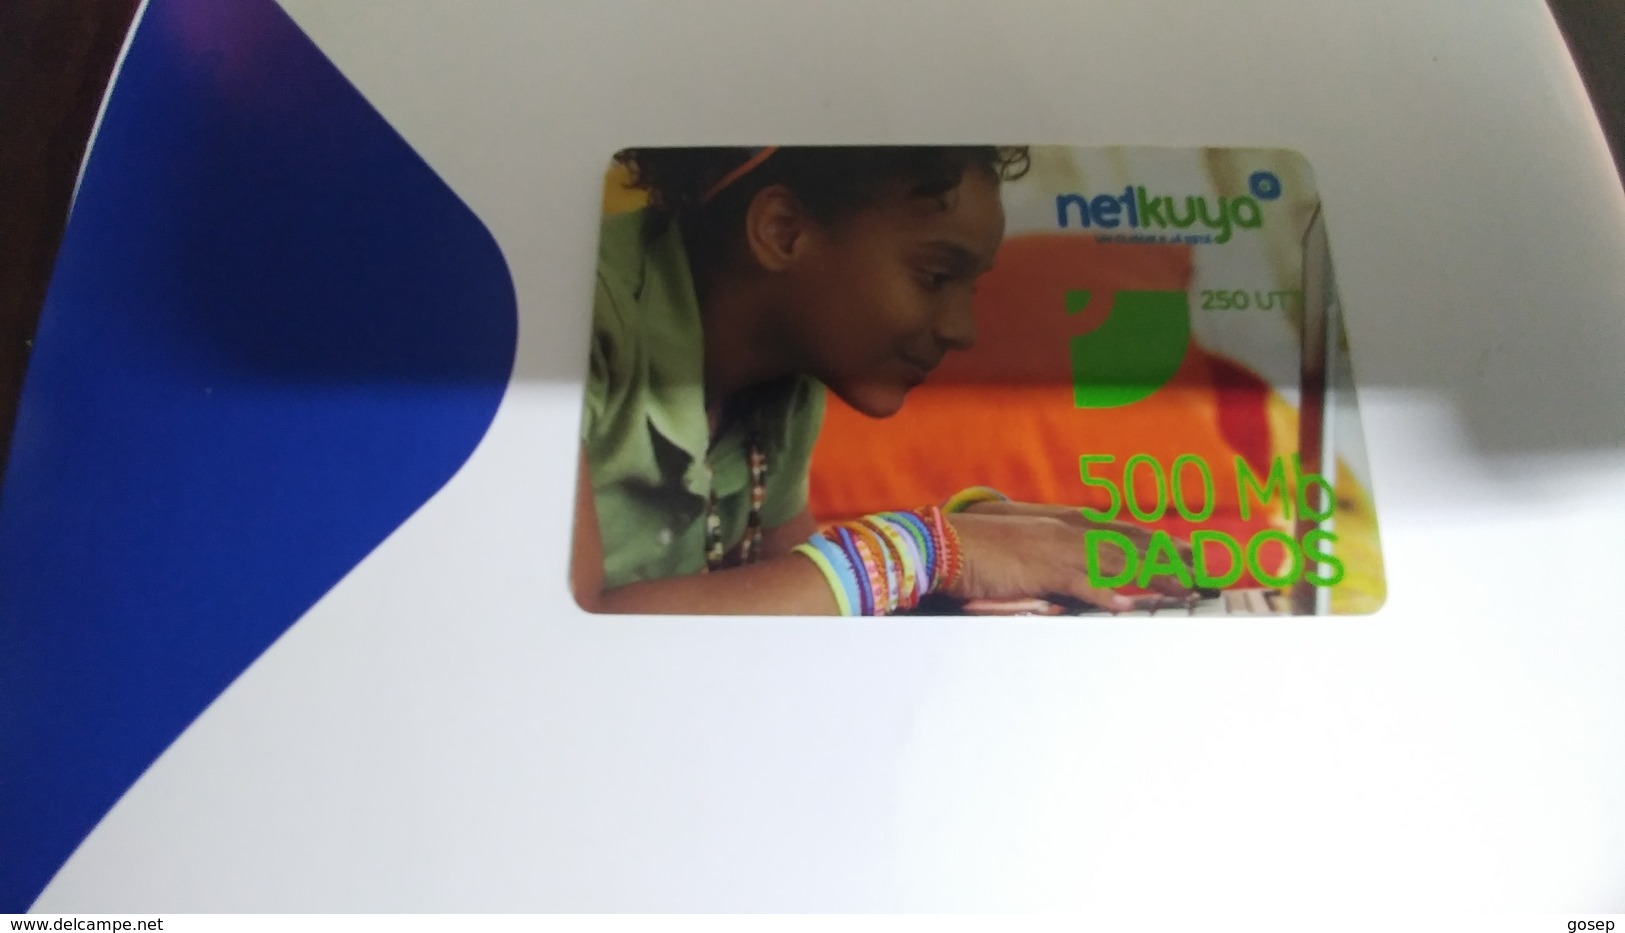 Angola-netkuya-(42)-(500mg Dados-250utt)-mint+1card Prepiad Free - Angola